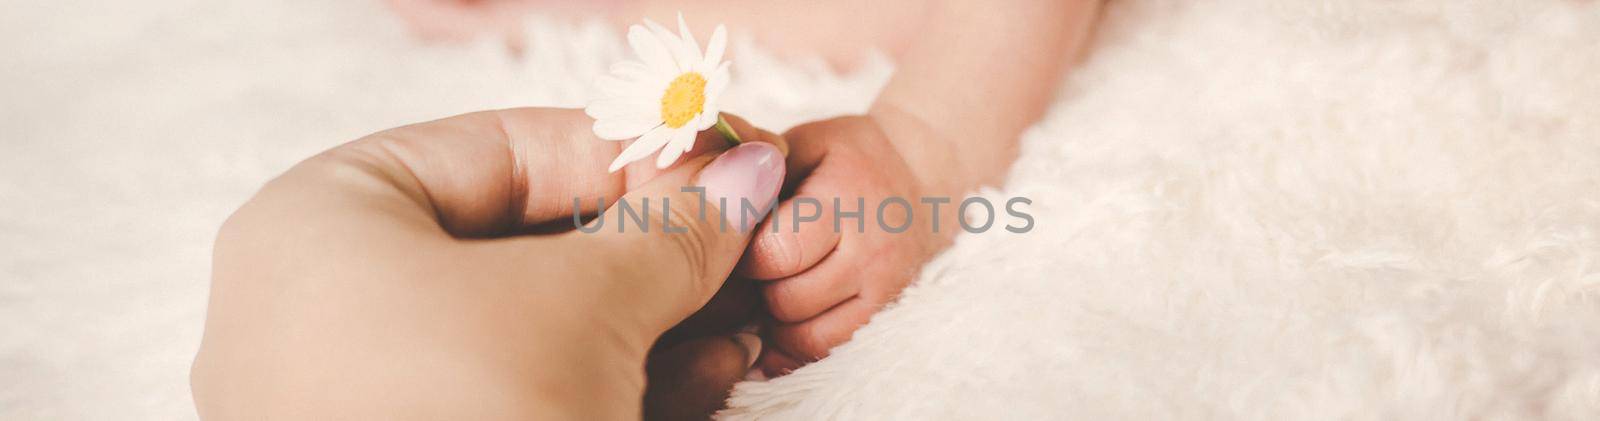 Newborn baby sleeps with chamomile. Selective focus. by yanadjana